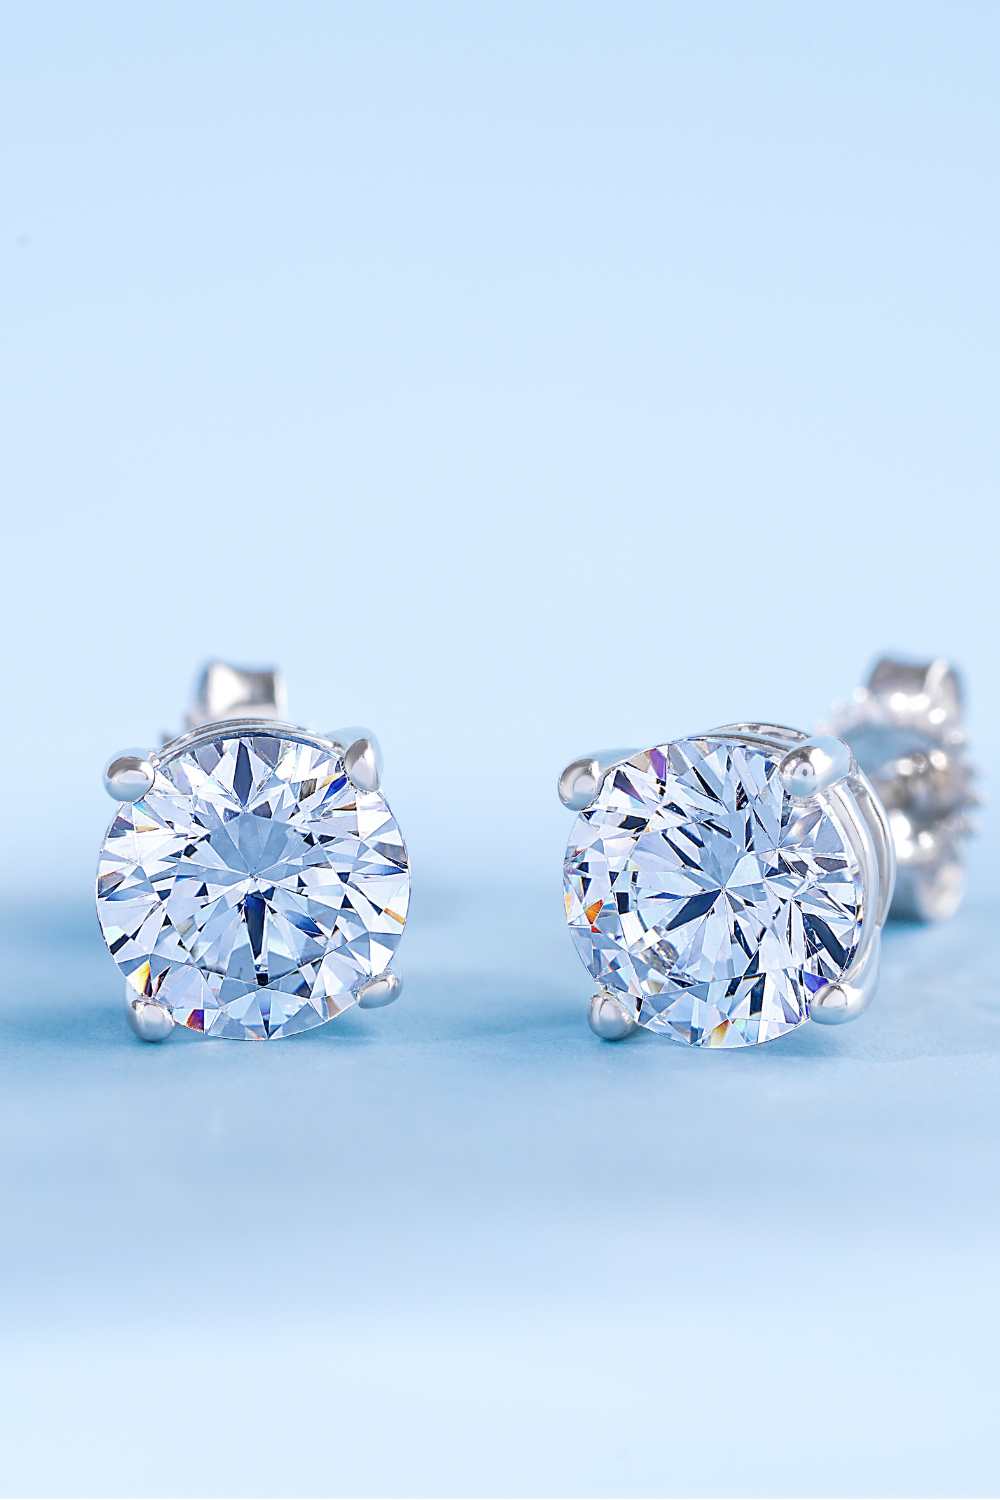 Diamond gifts, diamond earrings